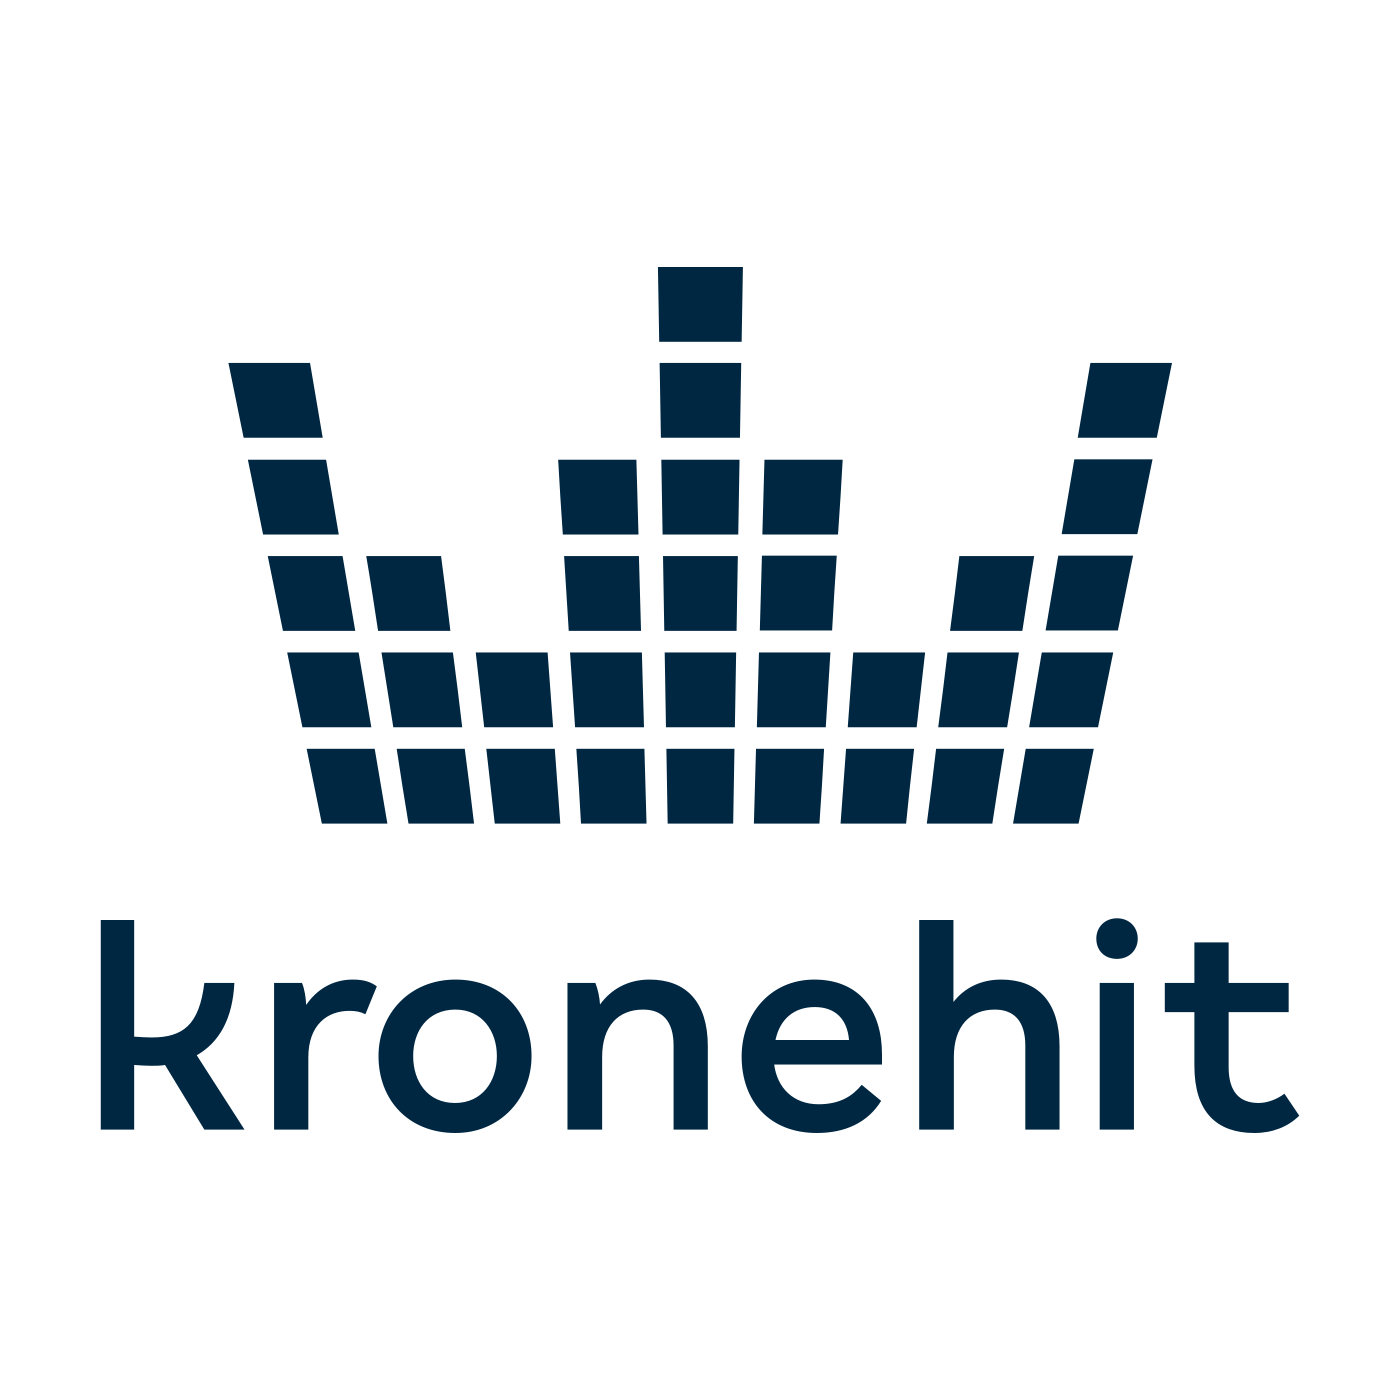 Logo Kronehit